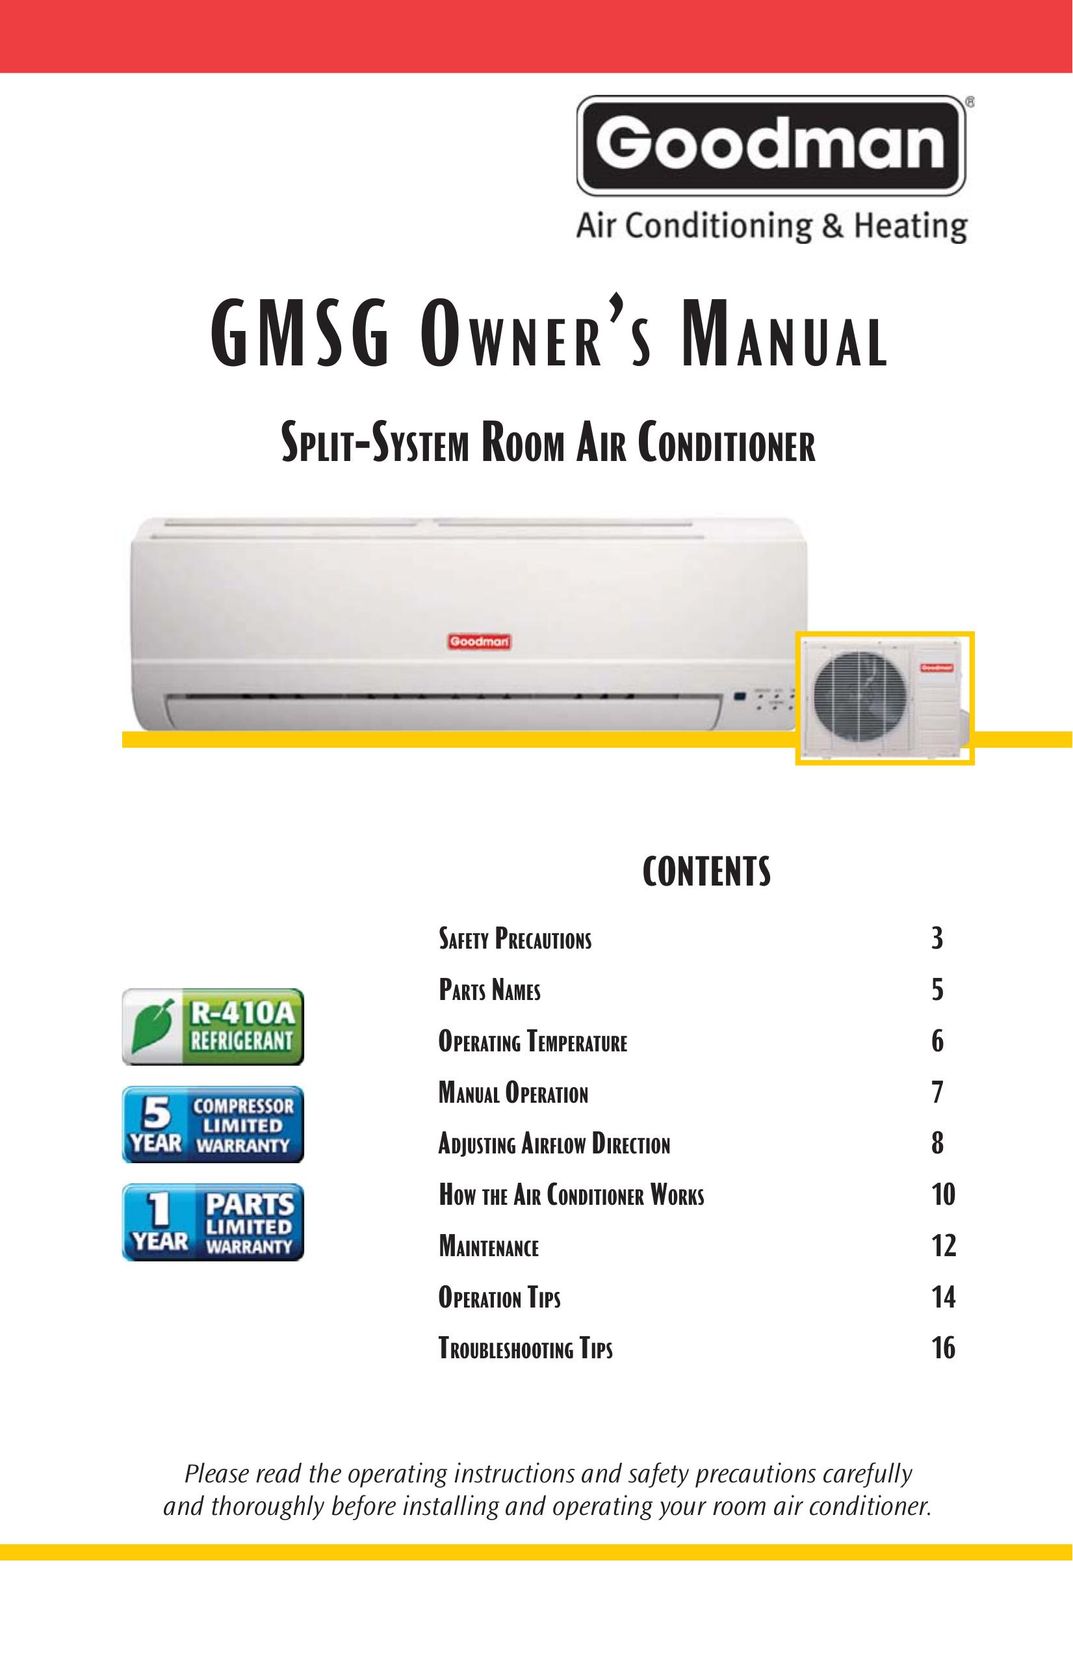 Goodmans GMSG Air Conditioner User Manual